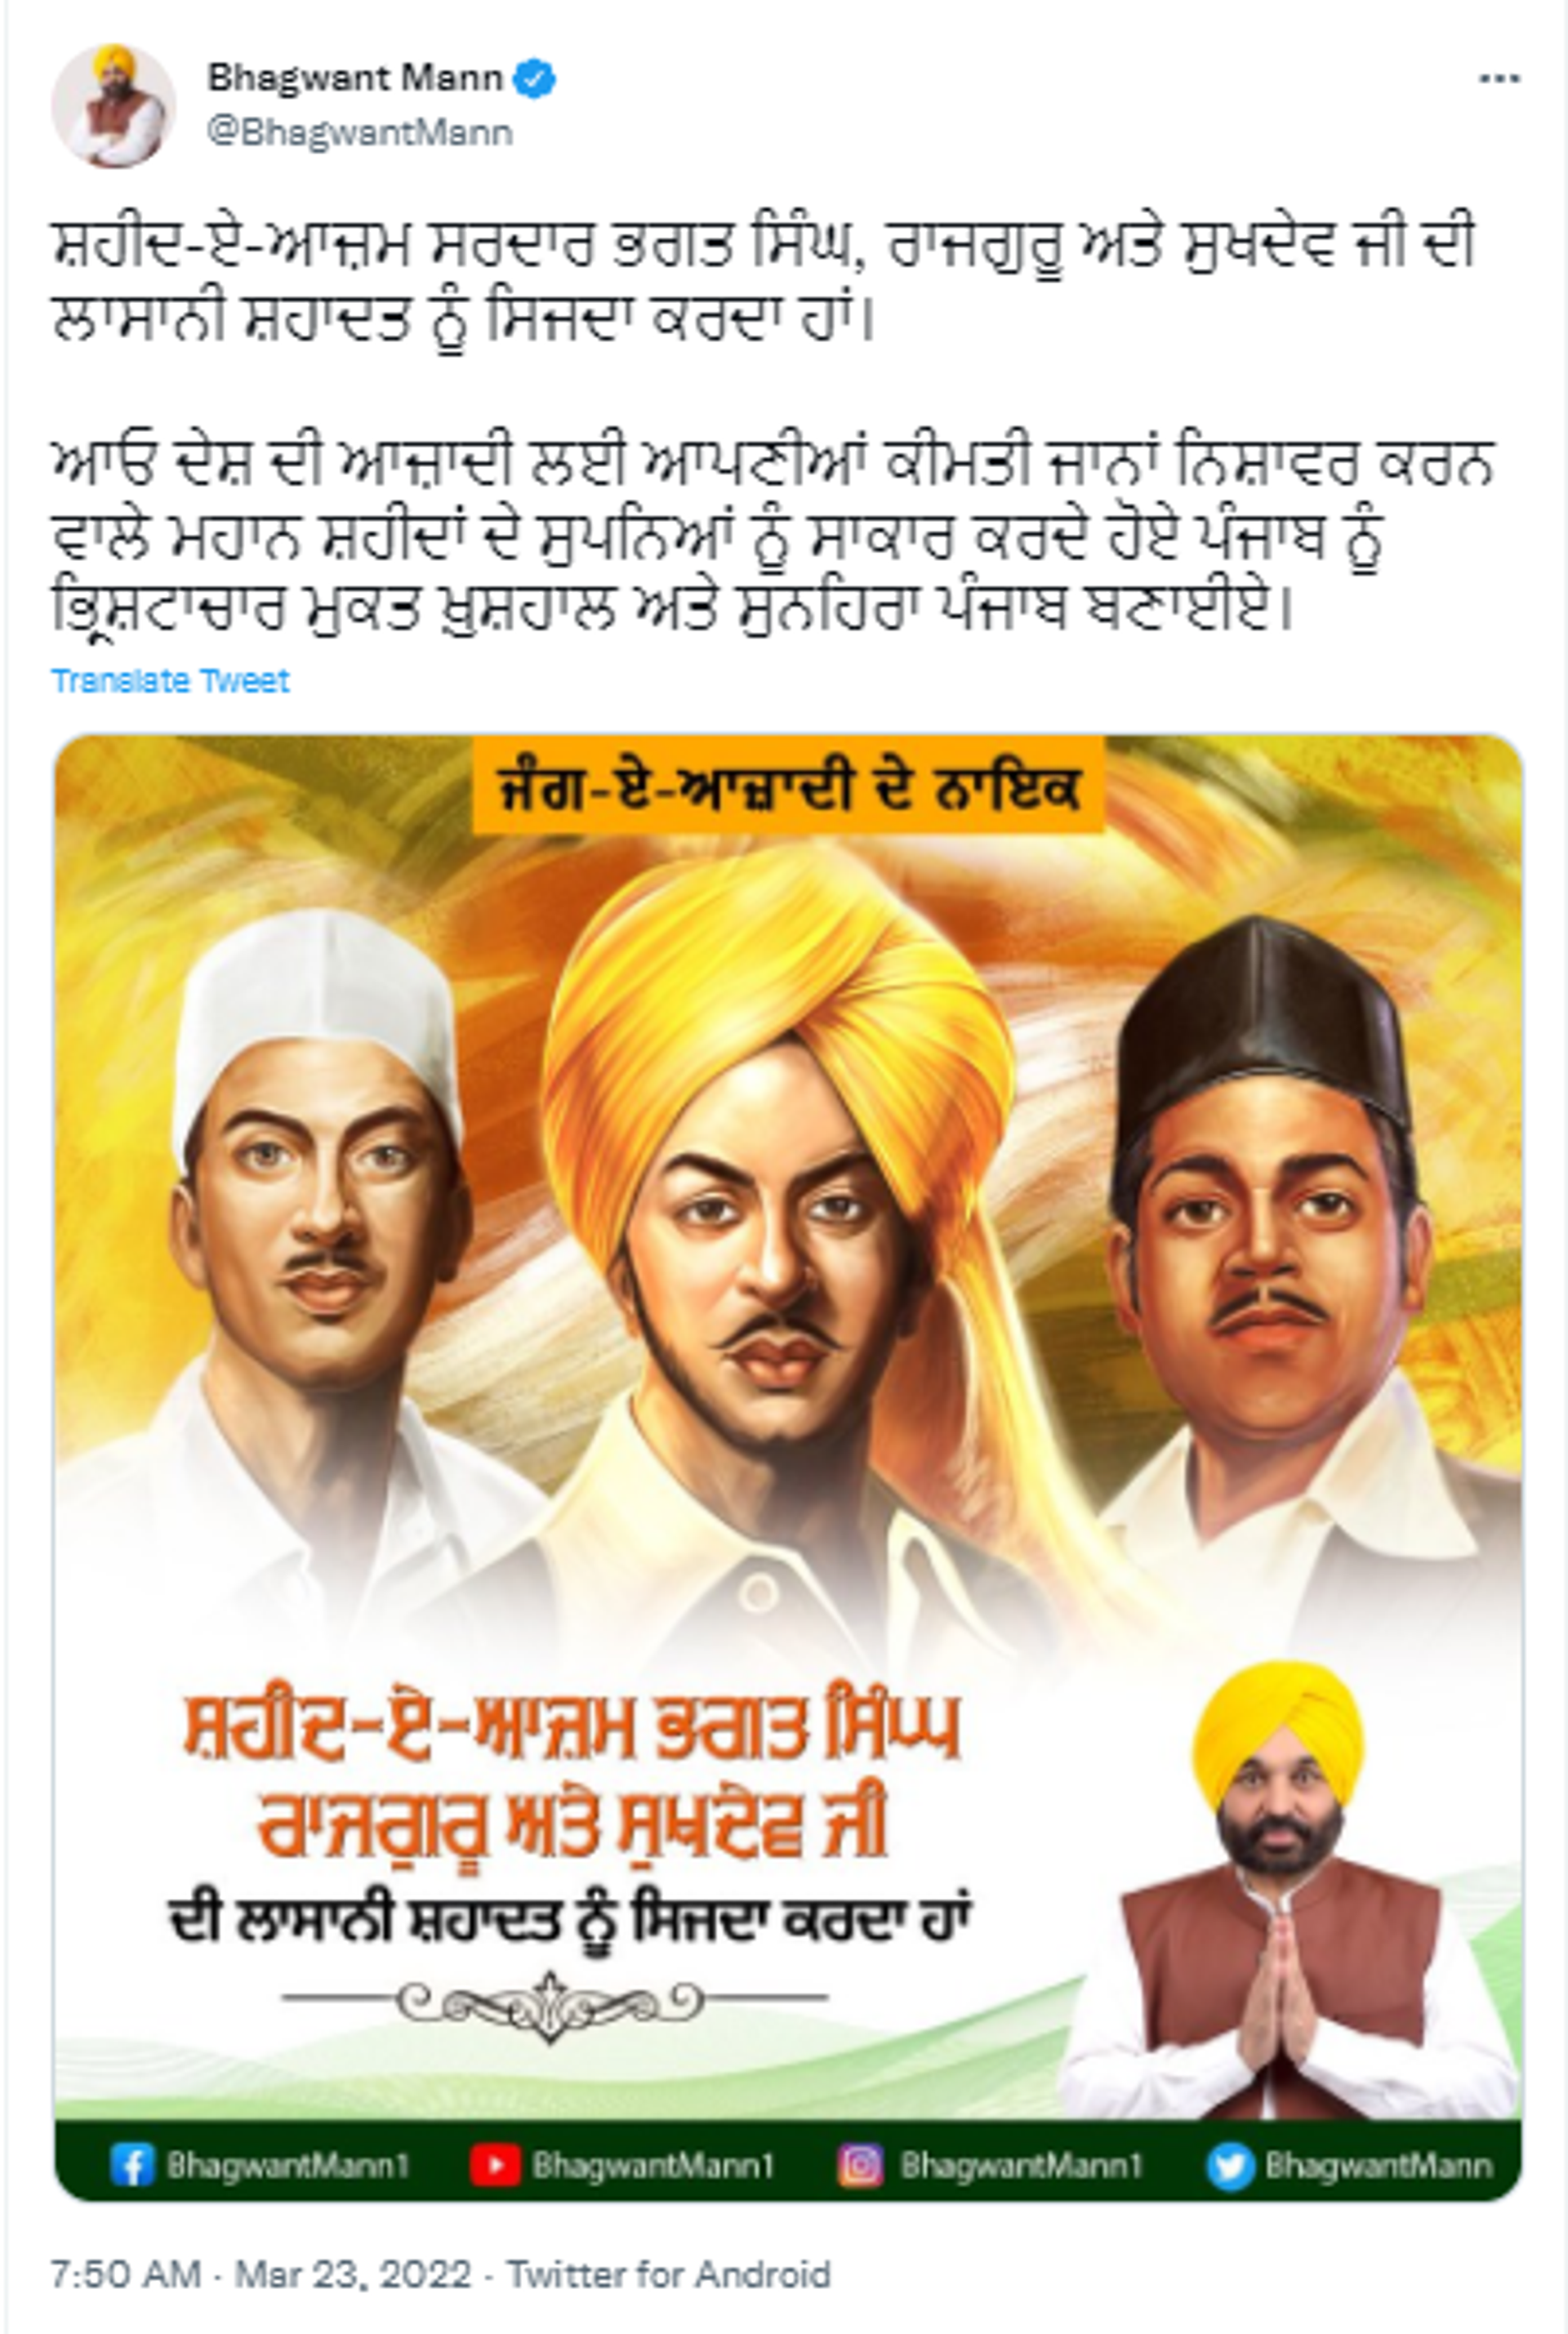 Punjab State Chief Bhagwant Mann Remembers Bhagat Singh, Sukhdev and Rajguru on Martyr's Day - Sputnik International, 1920, 23.03.2022